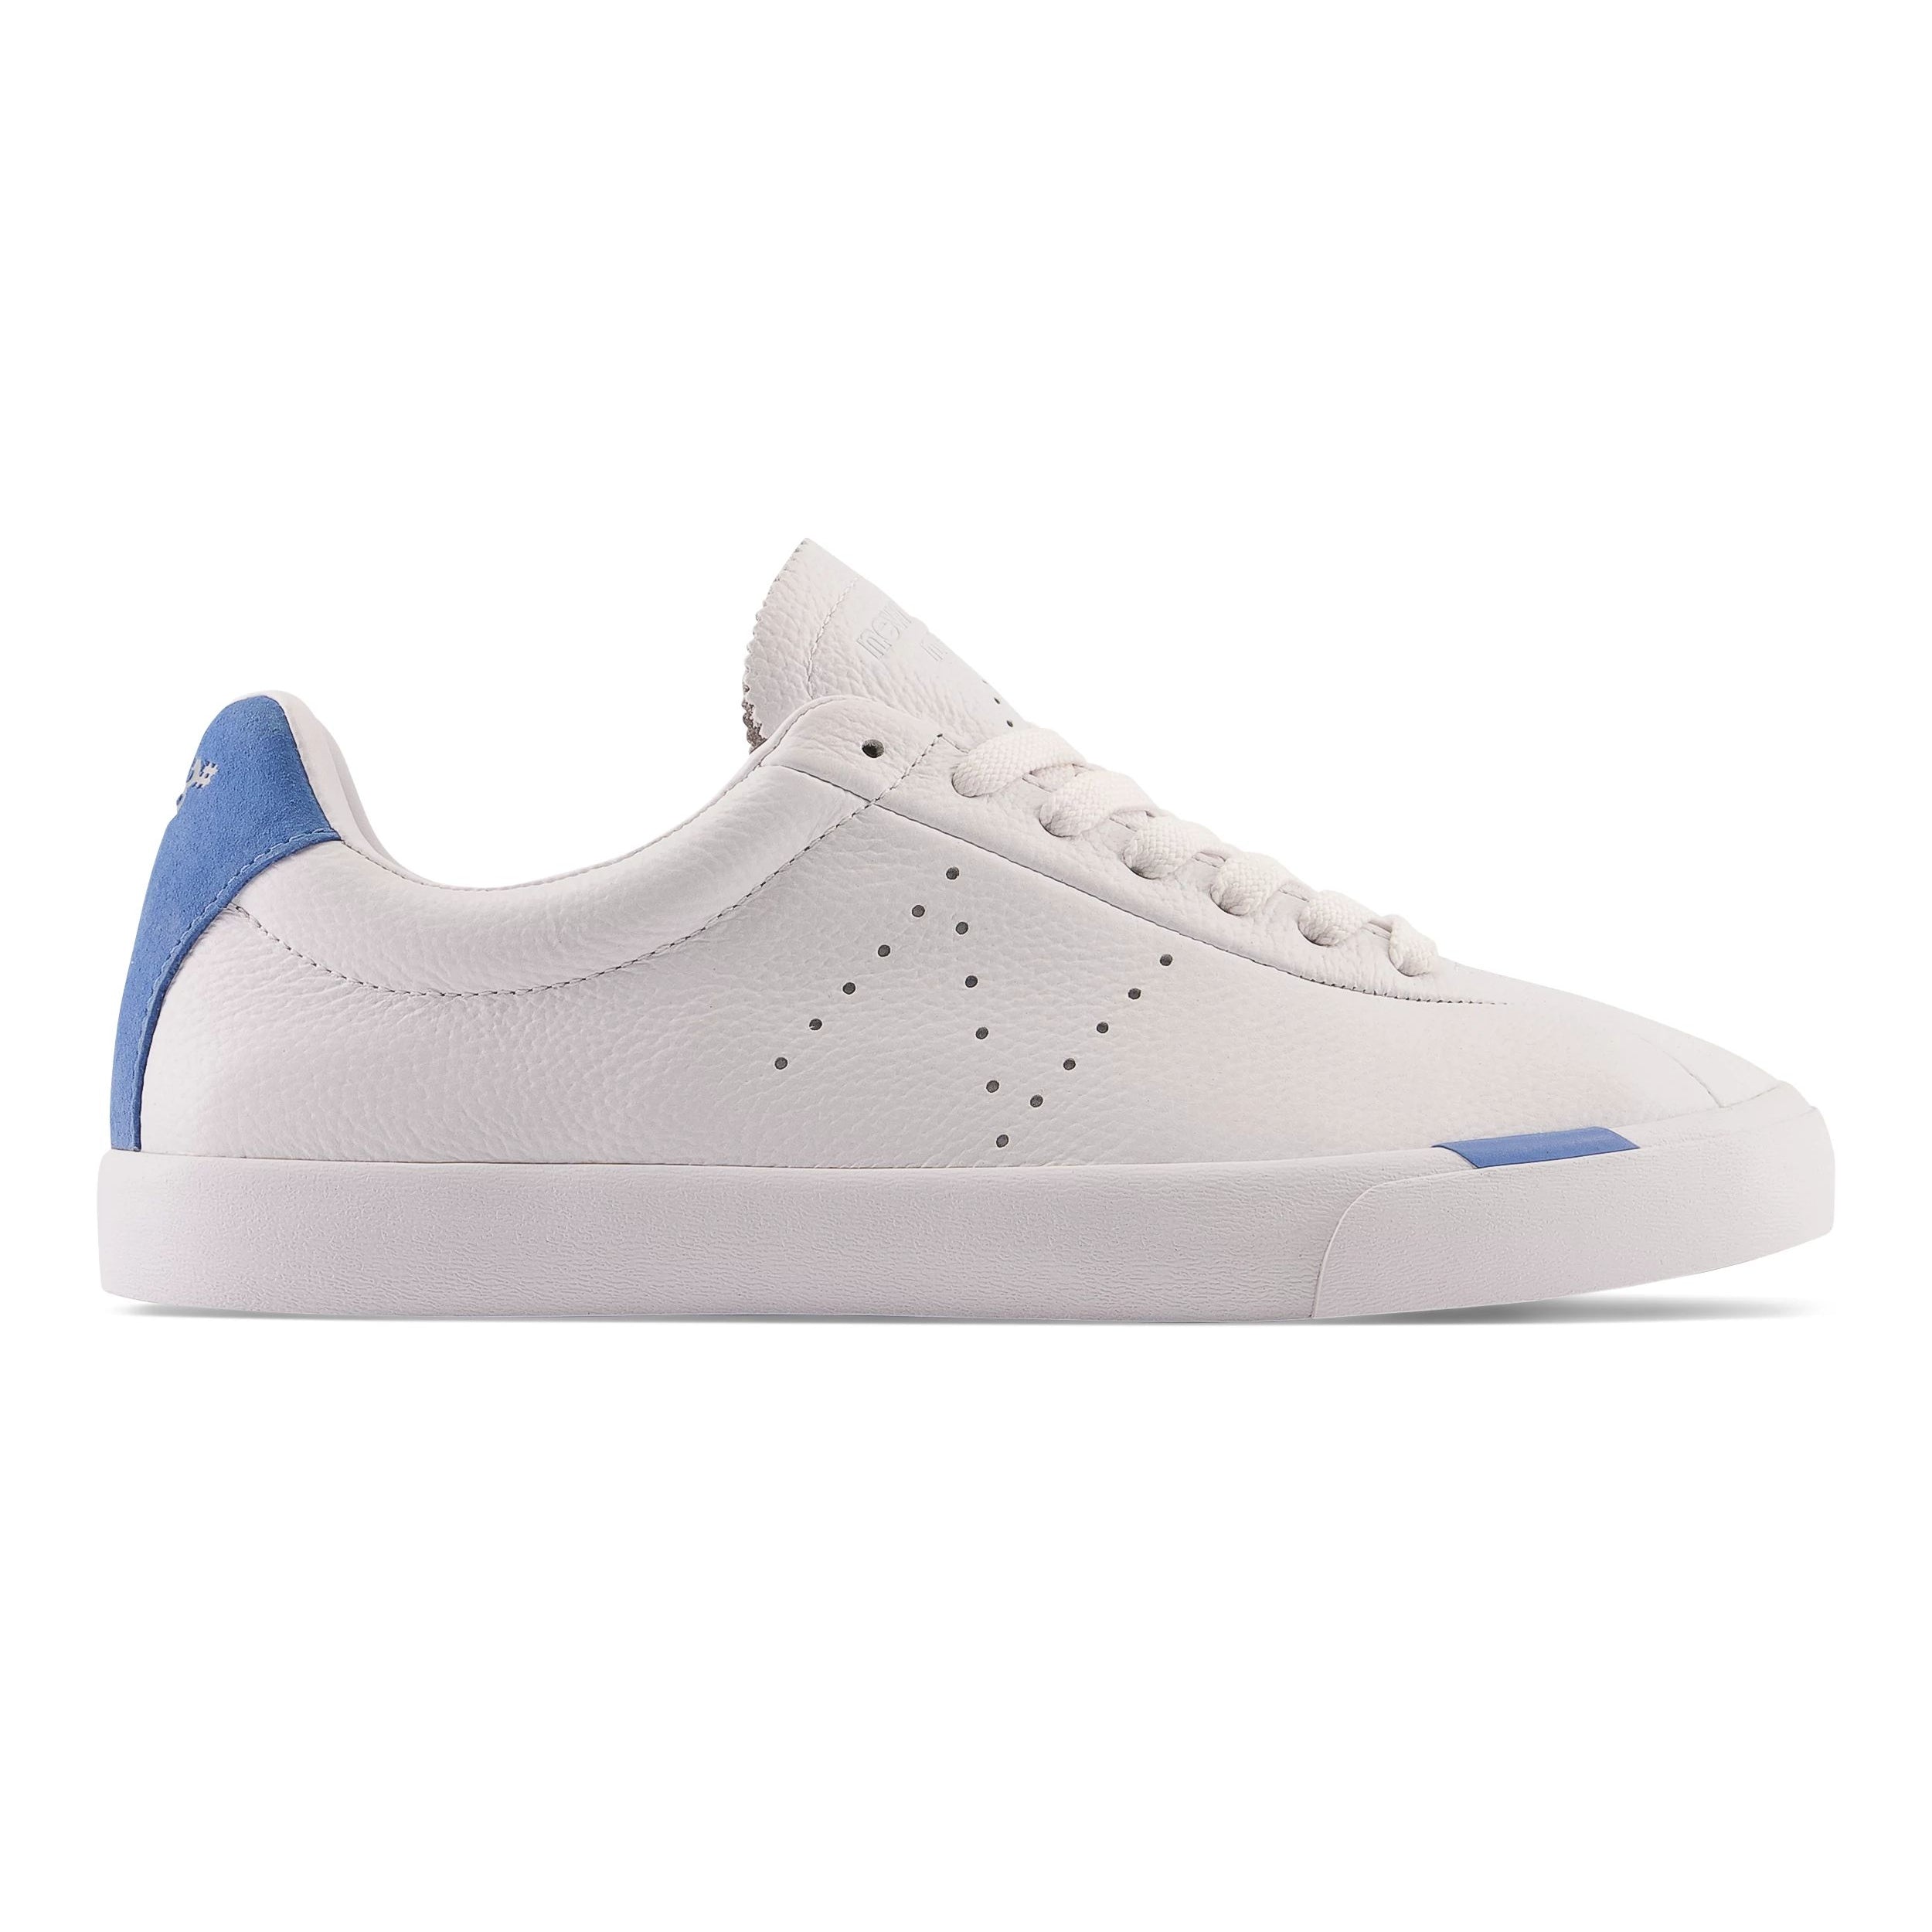 White/Blue NM22 NB Numeric Skate Shoe